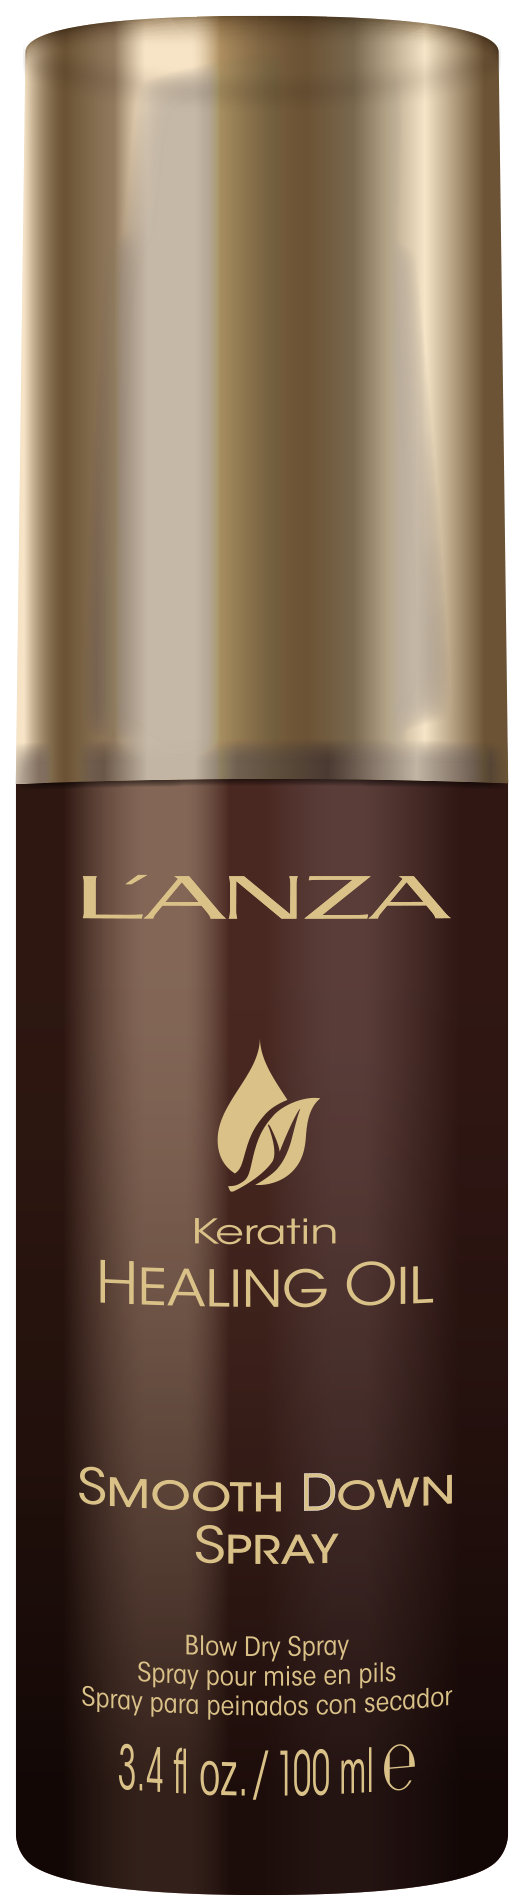 L'ANZA Keratin Healing Oil Smooth Down Spray